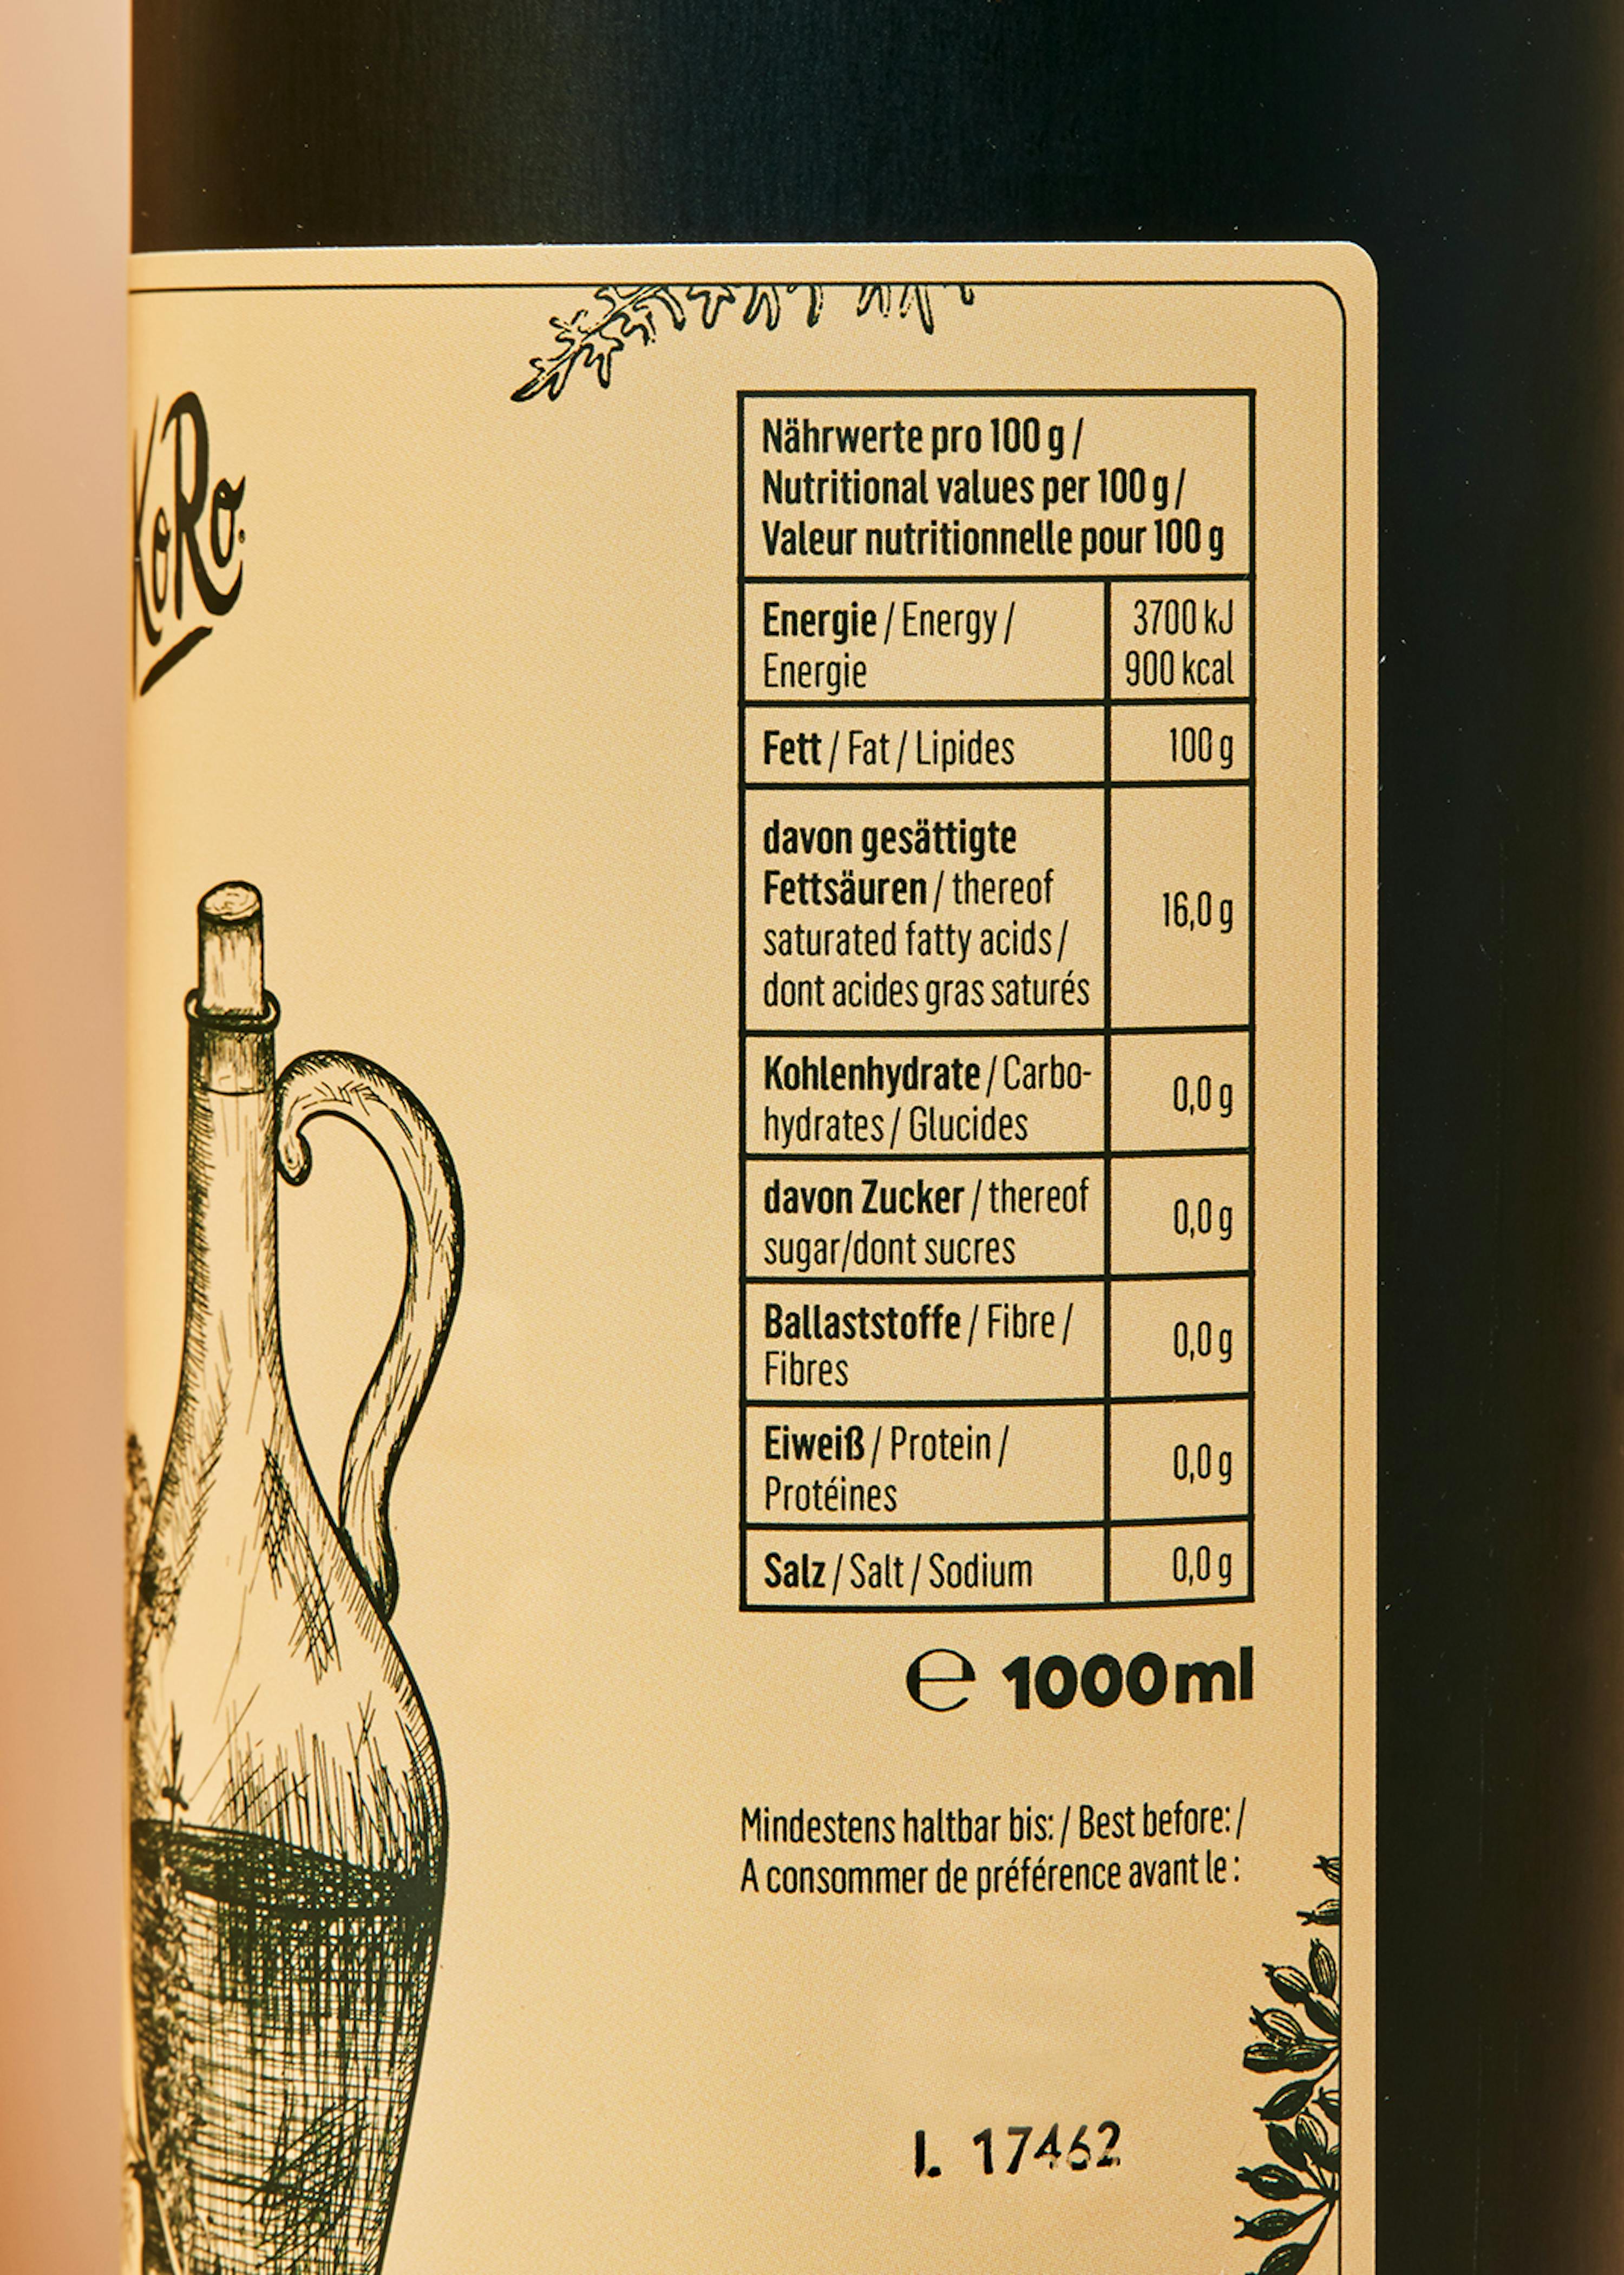 HUILE VIERGE DE GRAINES DE NIGELLE BIO 1000 ml (Cumin noir)